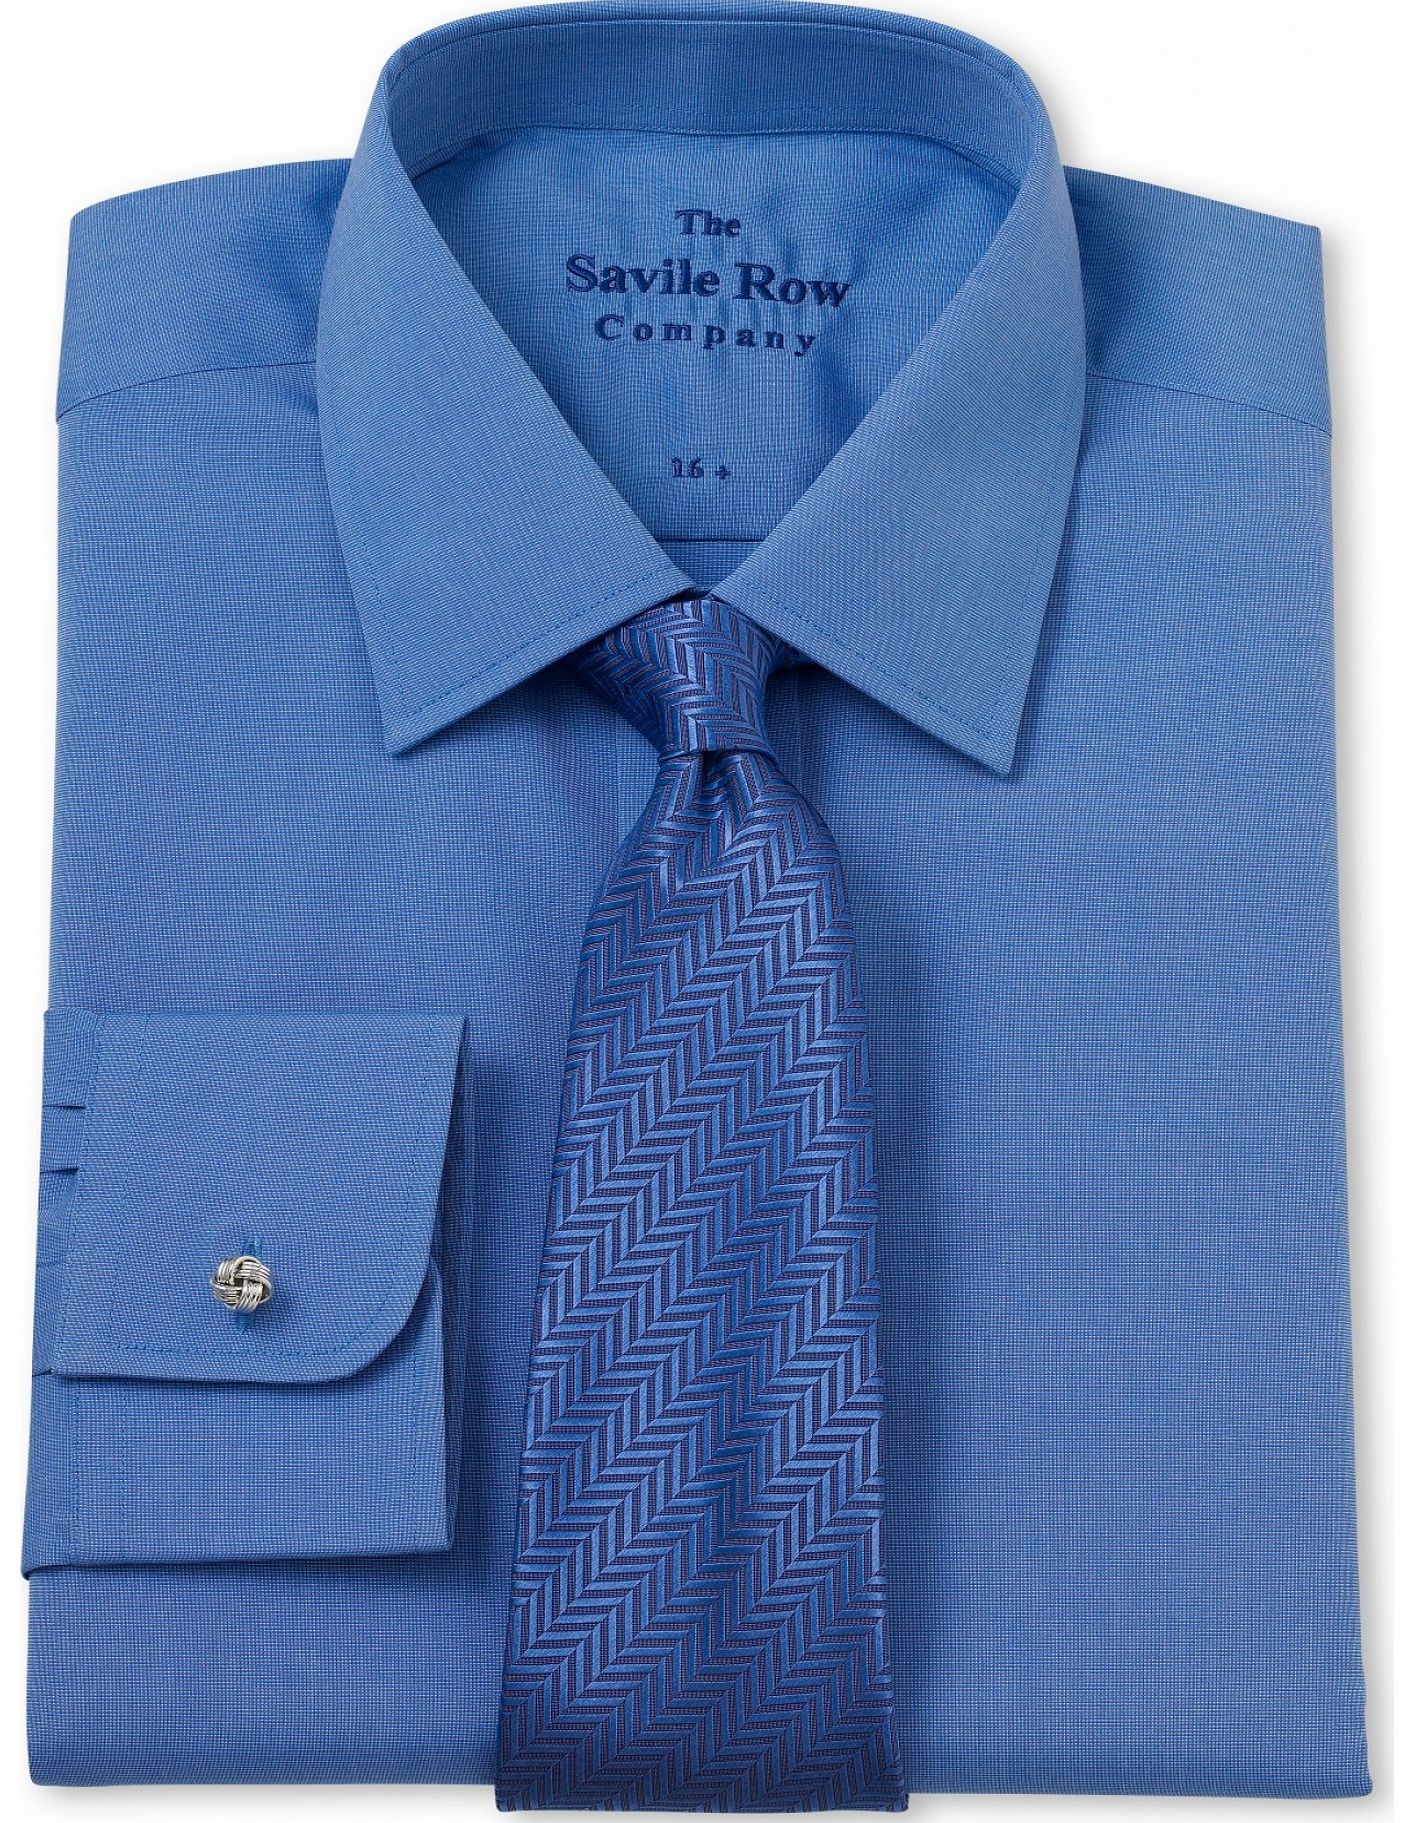 Savile Row Company Blue End on End Slim Fit Shirt 15 1/2`` Standard